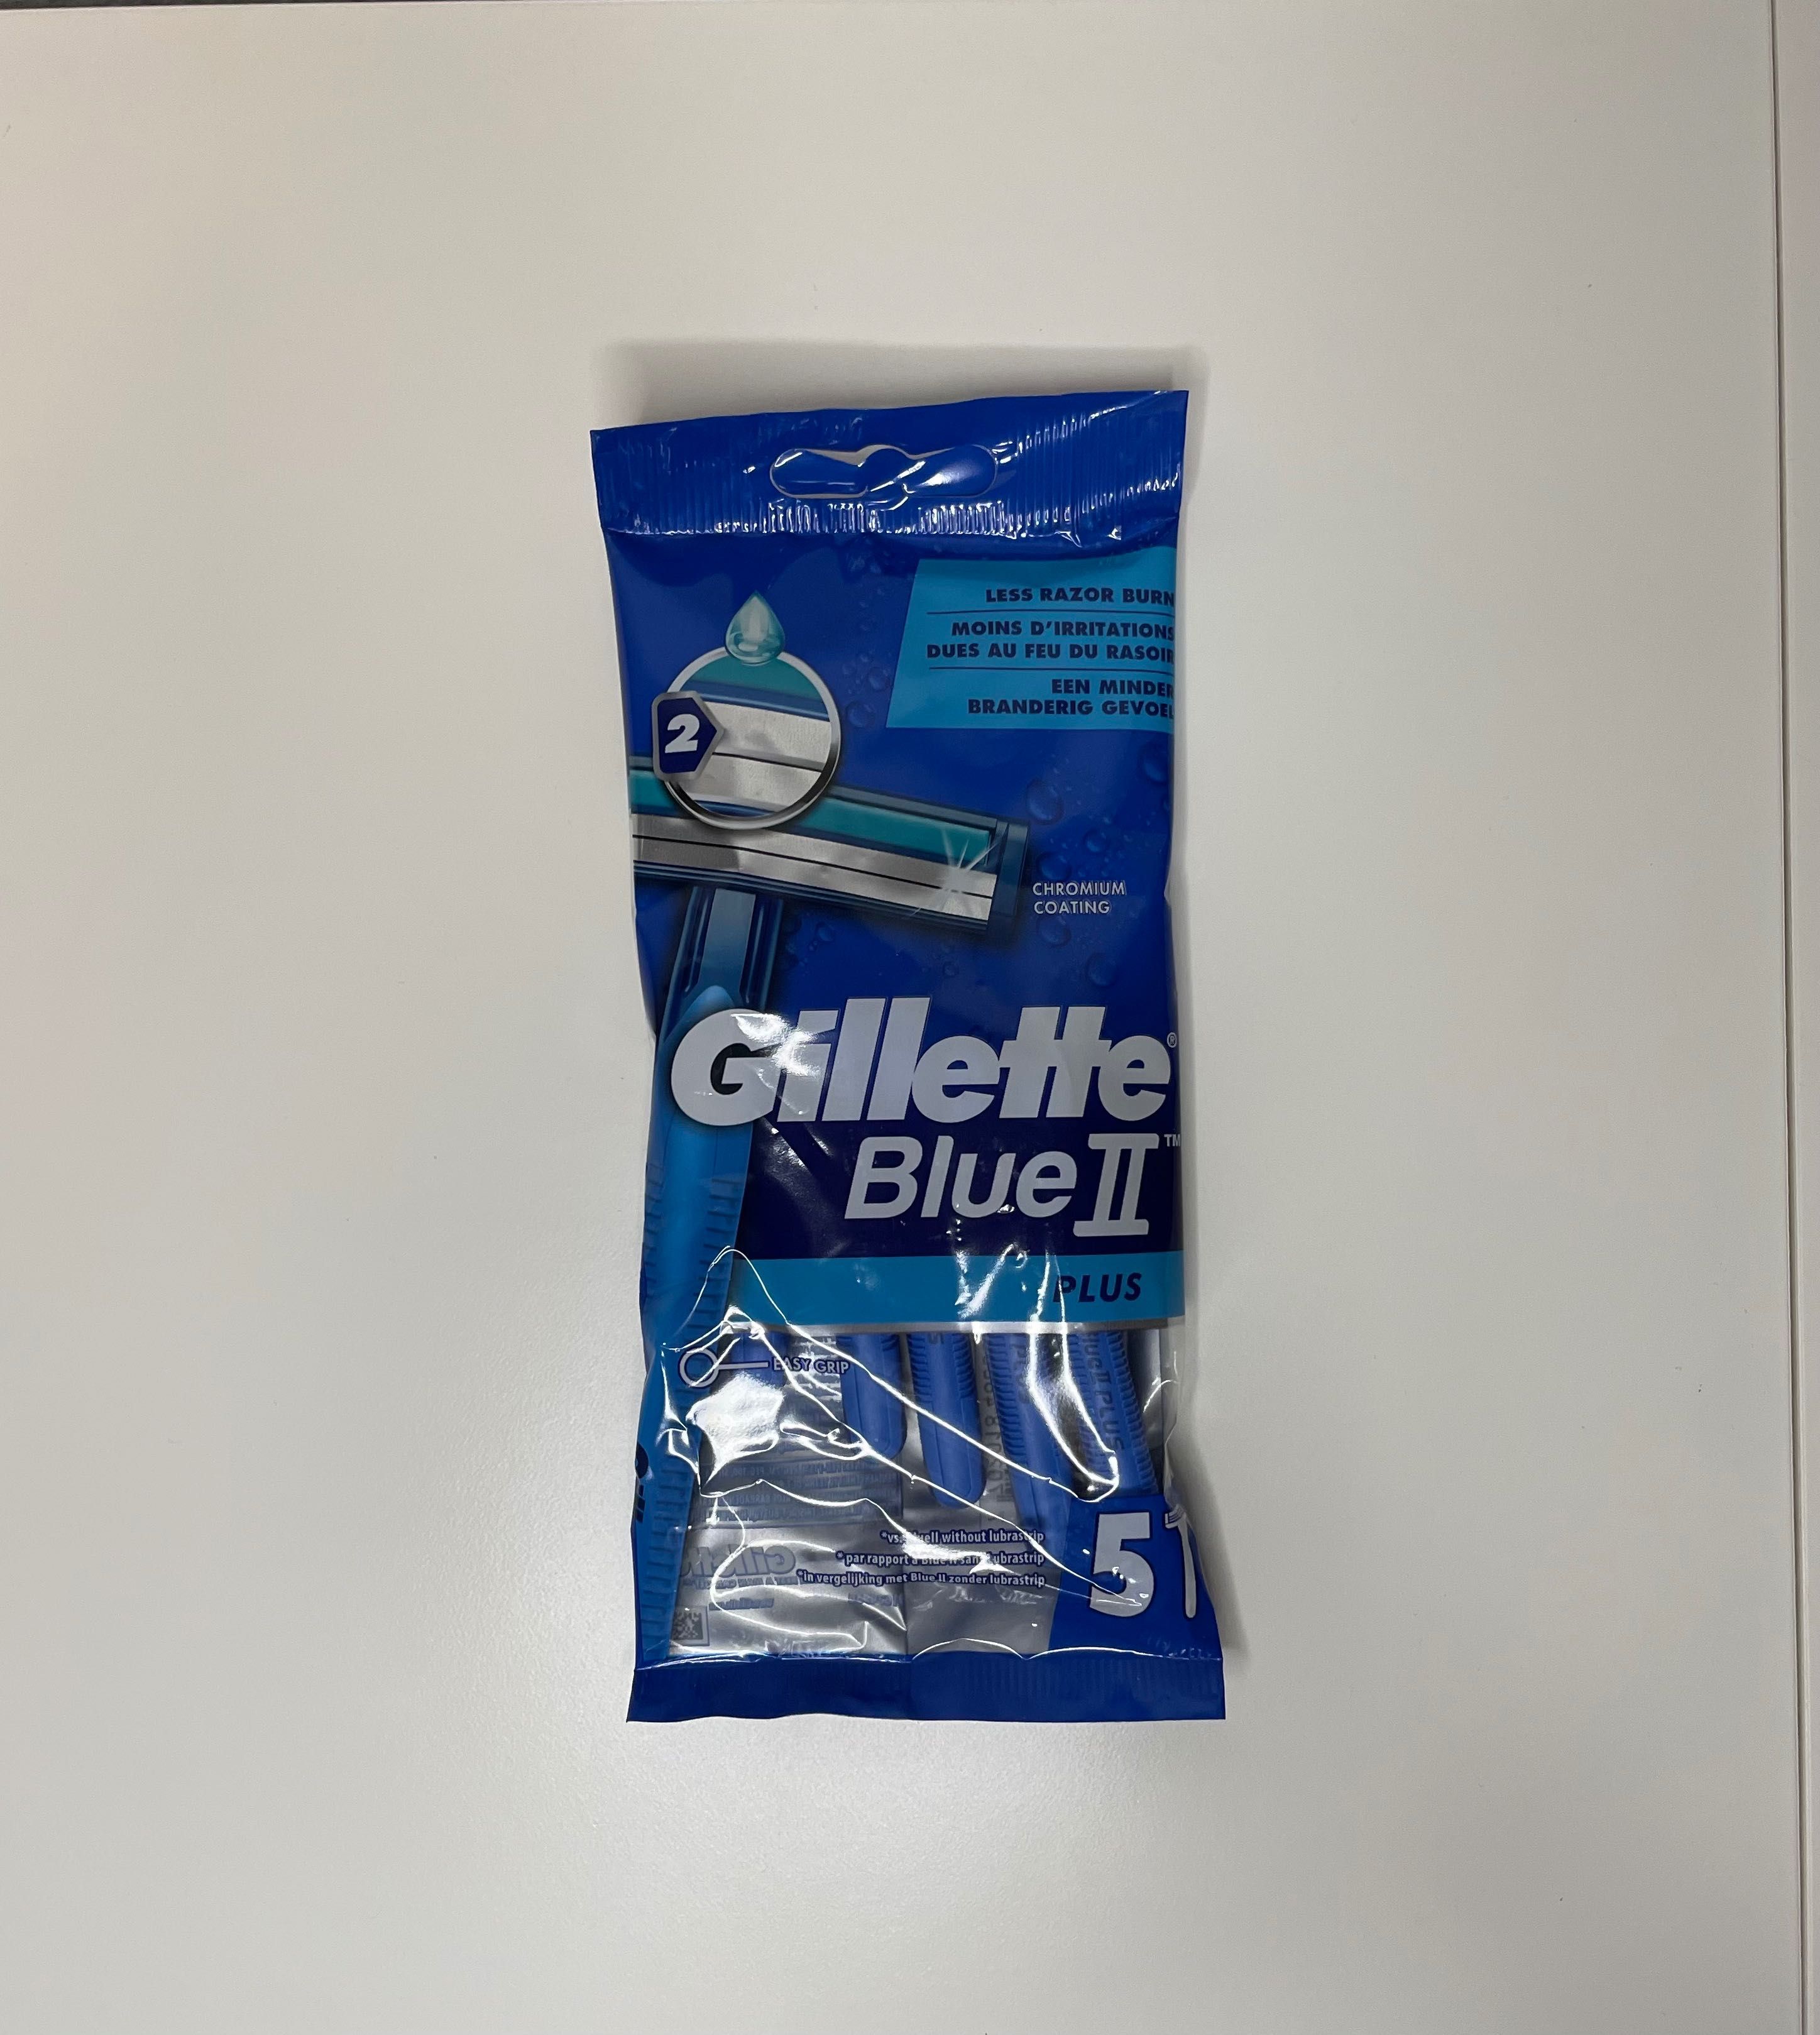 Gillette descartável Blue II Plus (5 uni.)